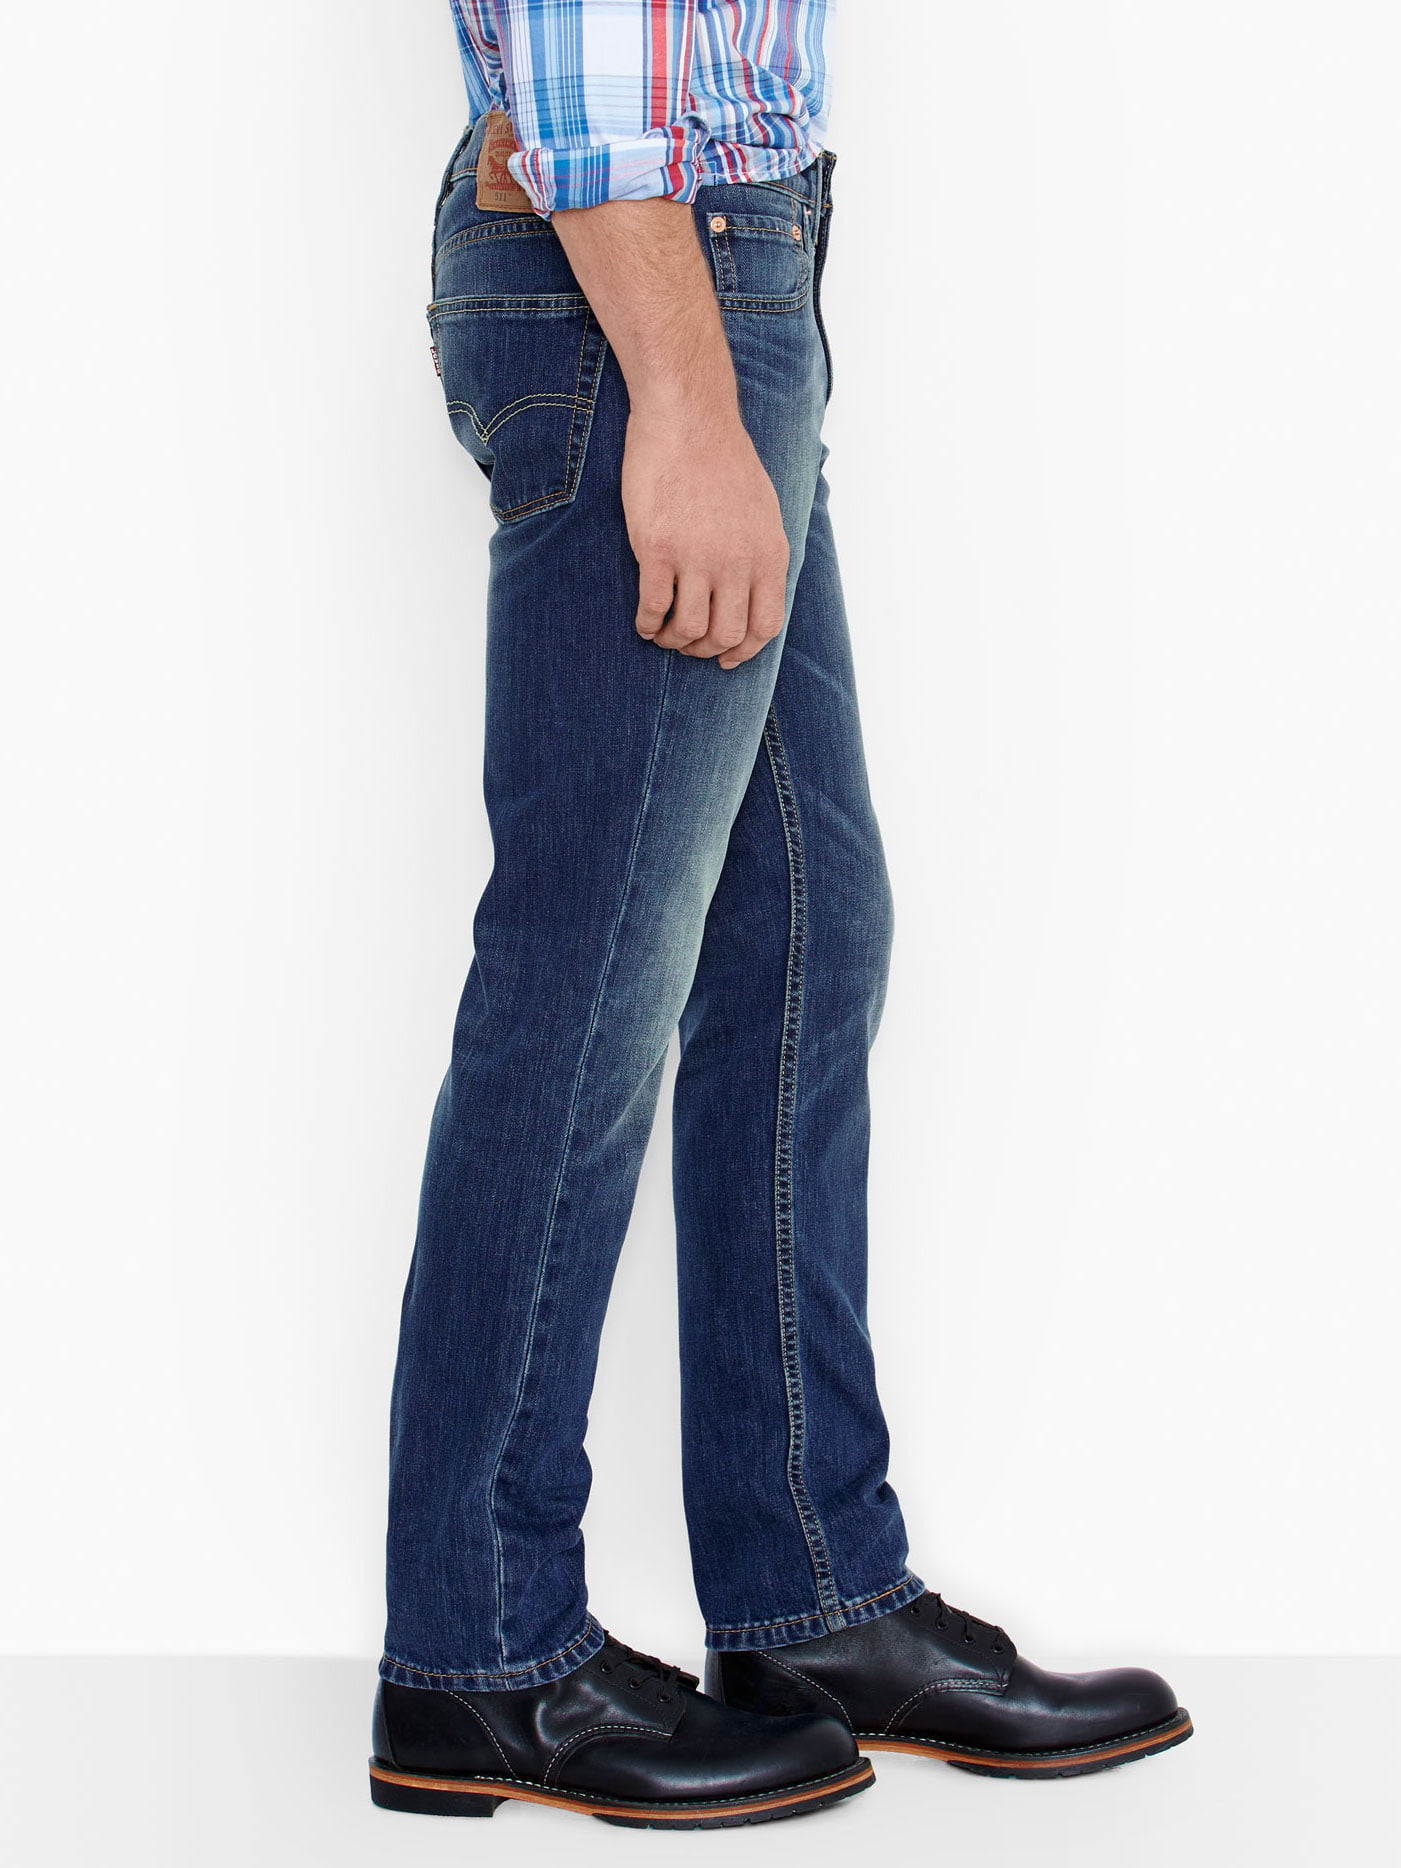 Levi's 511 Men's Slim Fit Stretch Jeans - Throttle, Throttle, 28X30 -  